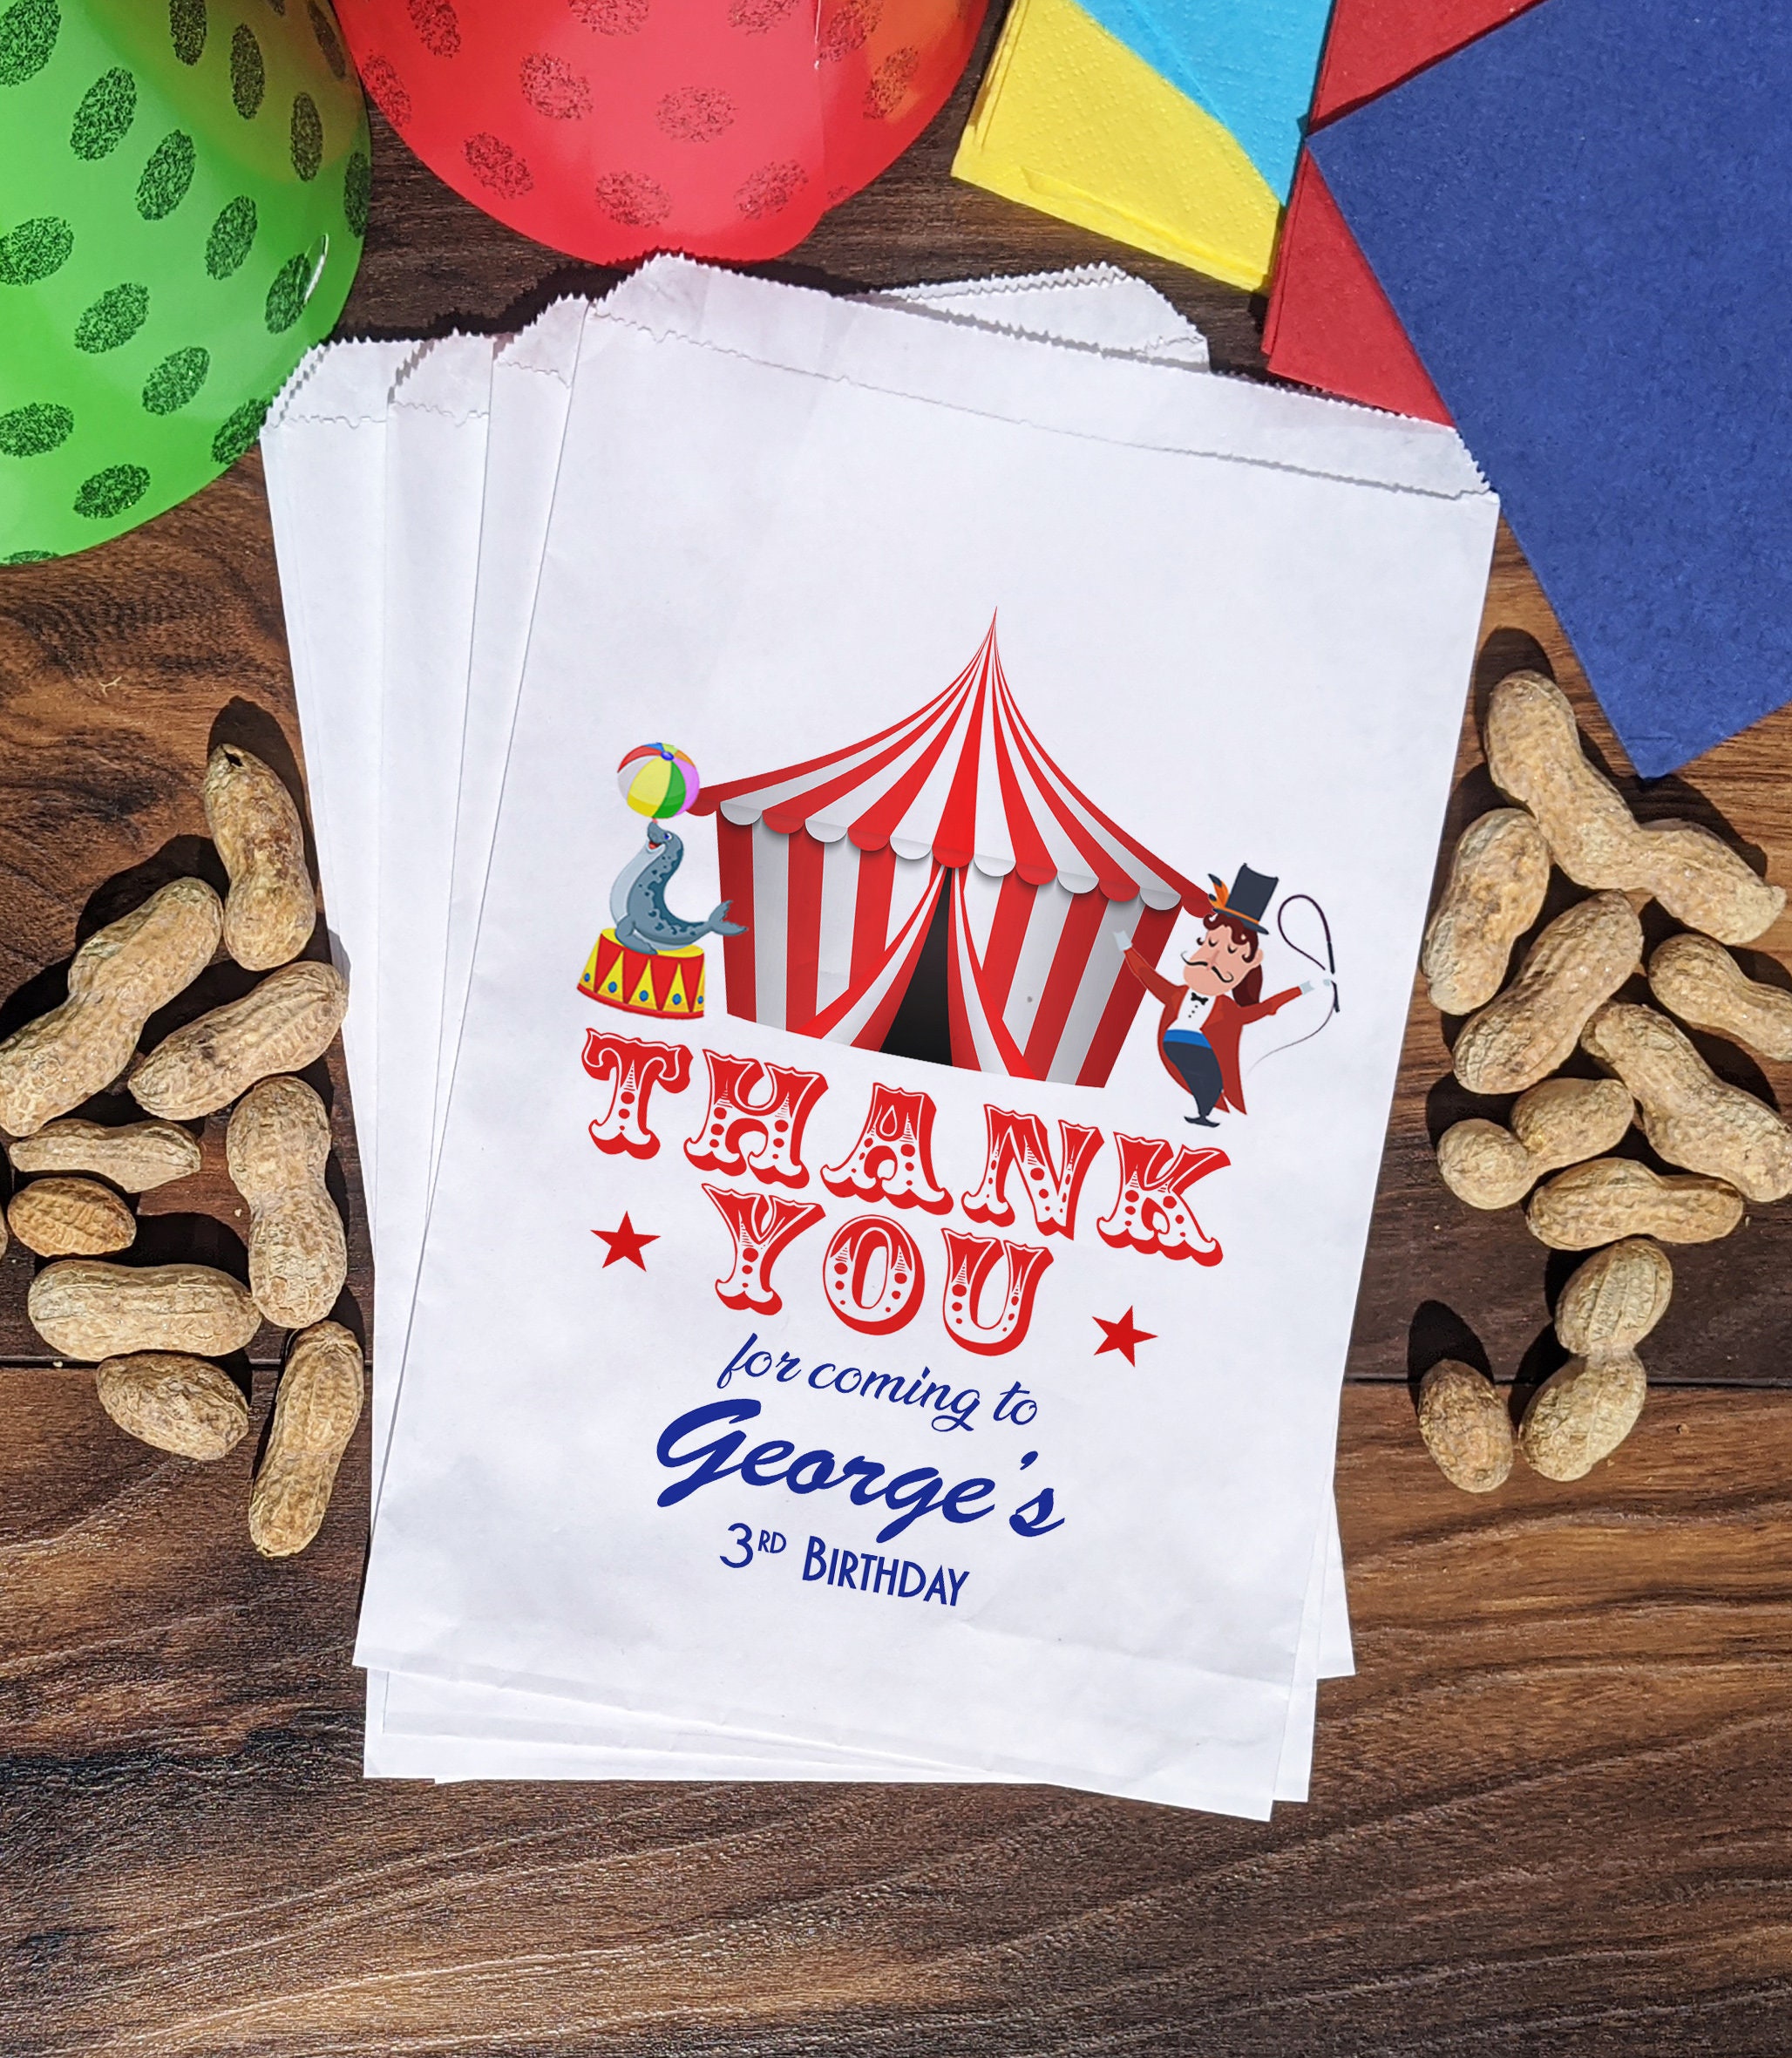 Peanut bags 30 Bags-Circus-Carnival-Sports Parties-Peanut Bags Cute Graphics! 